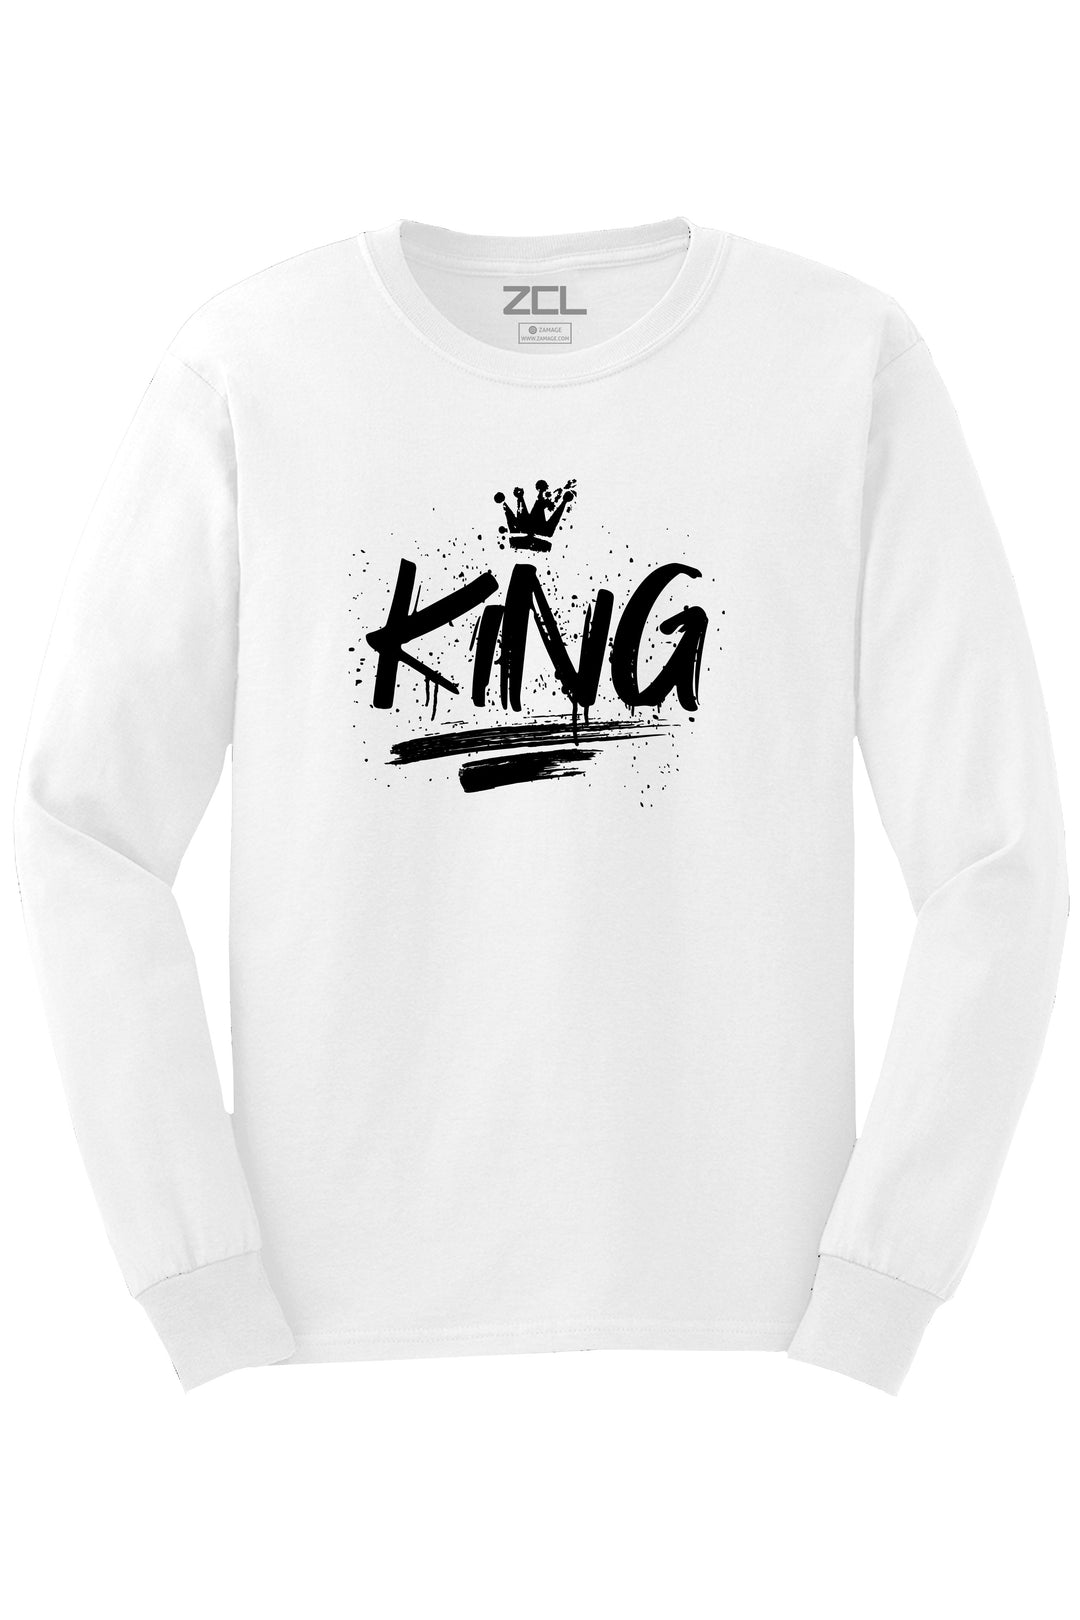 King Long Sleeve Tee (Black Logo) - Zamage